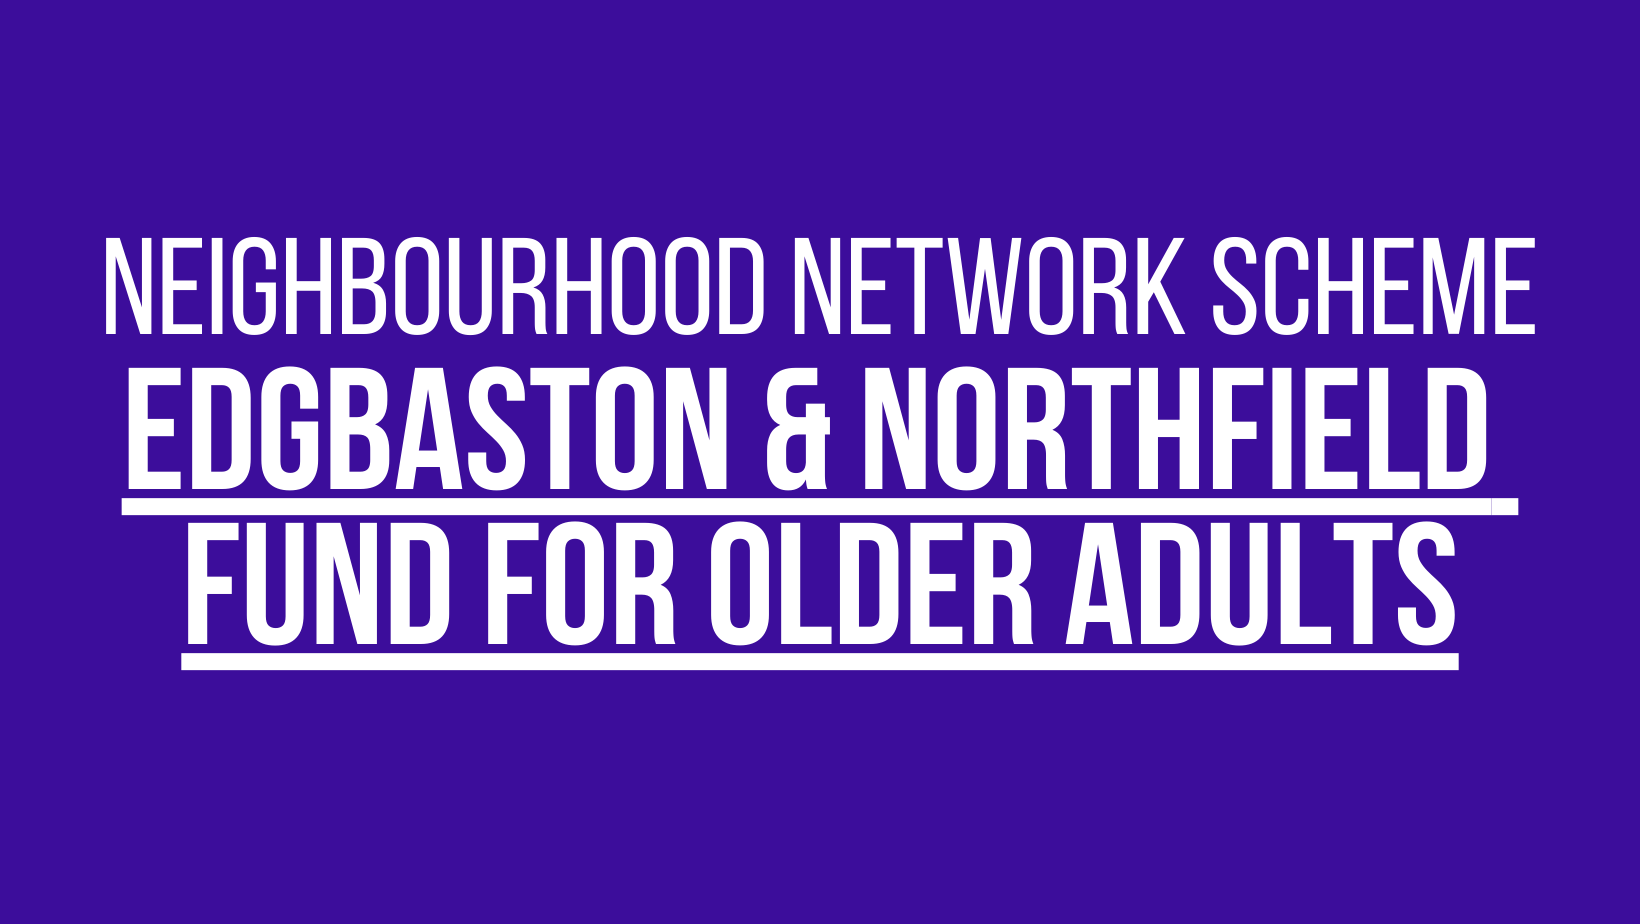 Edgbaston & Northfield NNS Fund for Older Adults